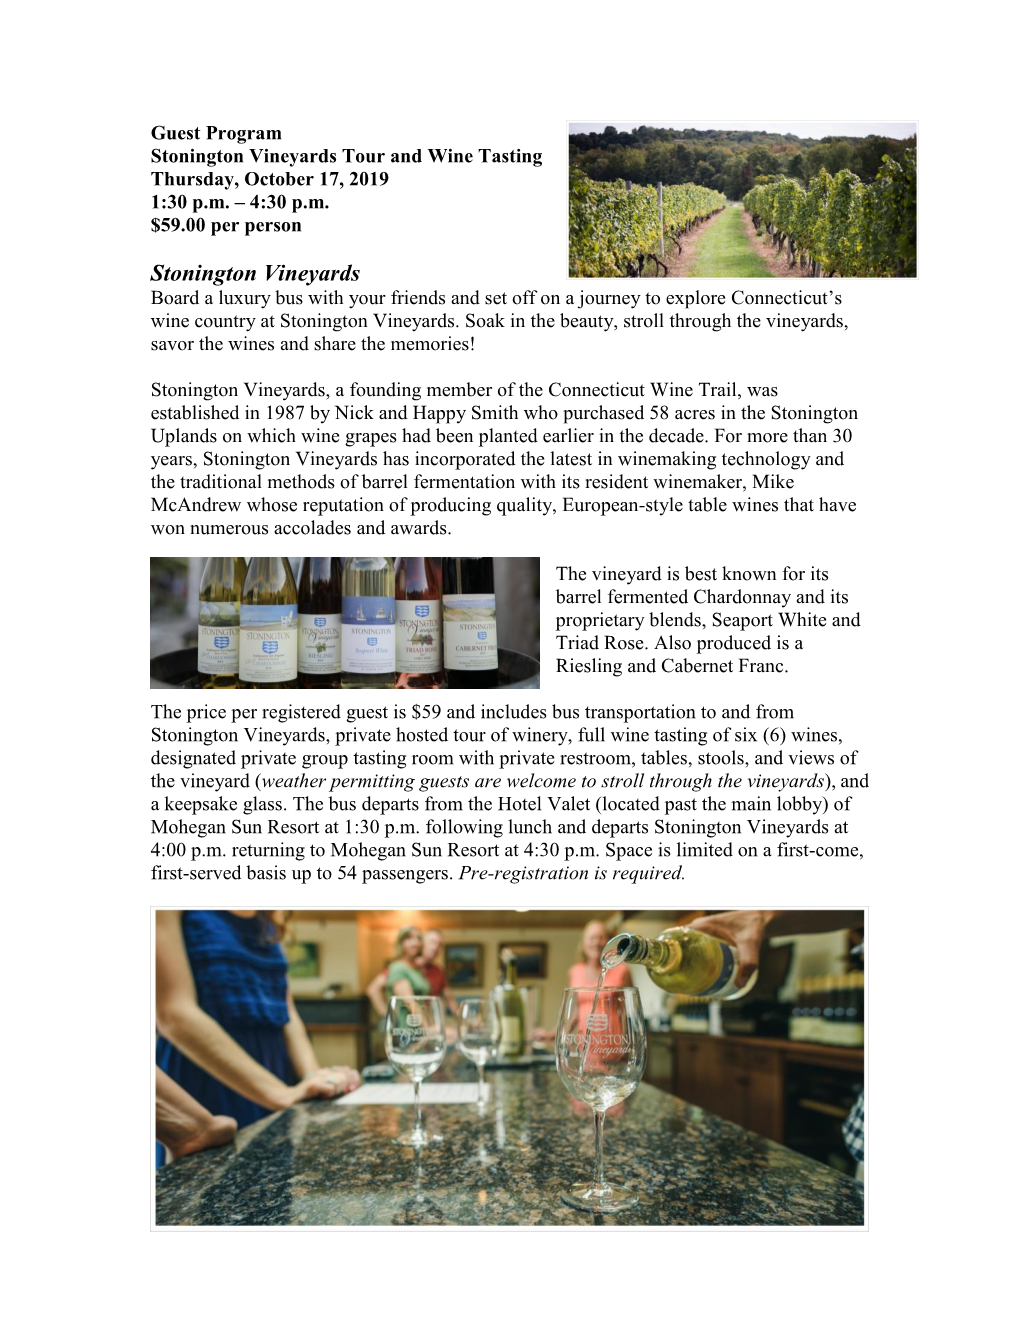 Stonington Vineyards Tour and Wine Tasting Thursday, October 17, 2019 1:30 P.M